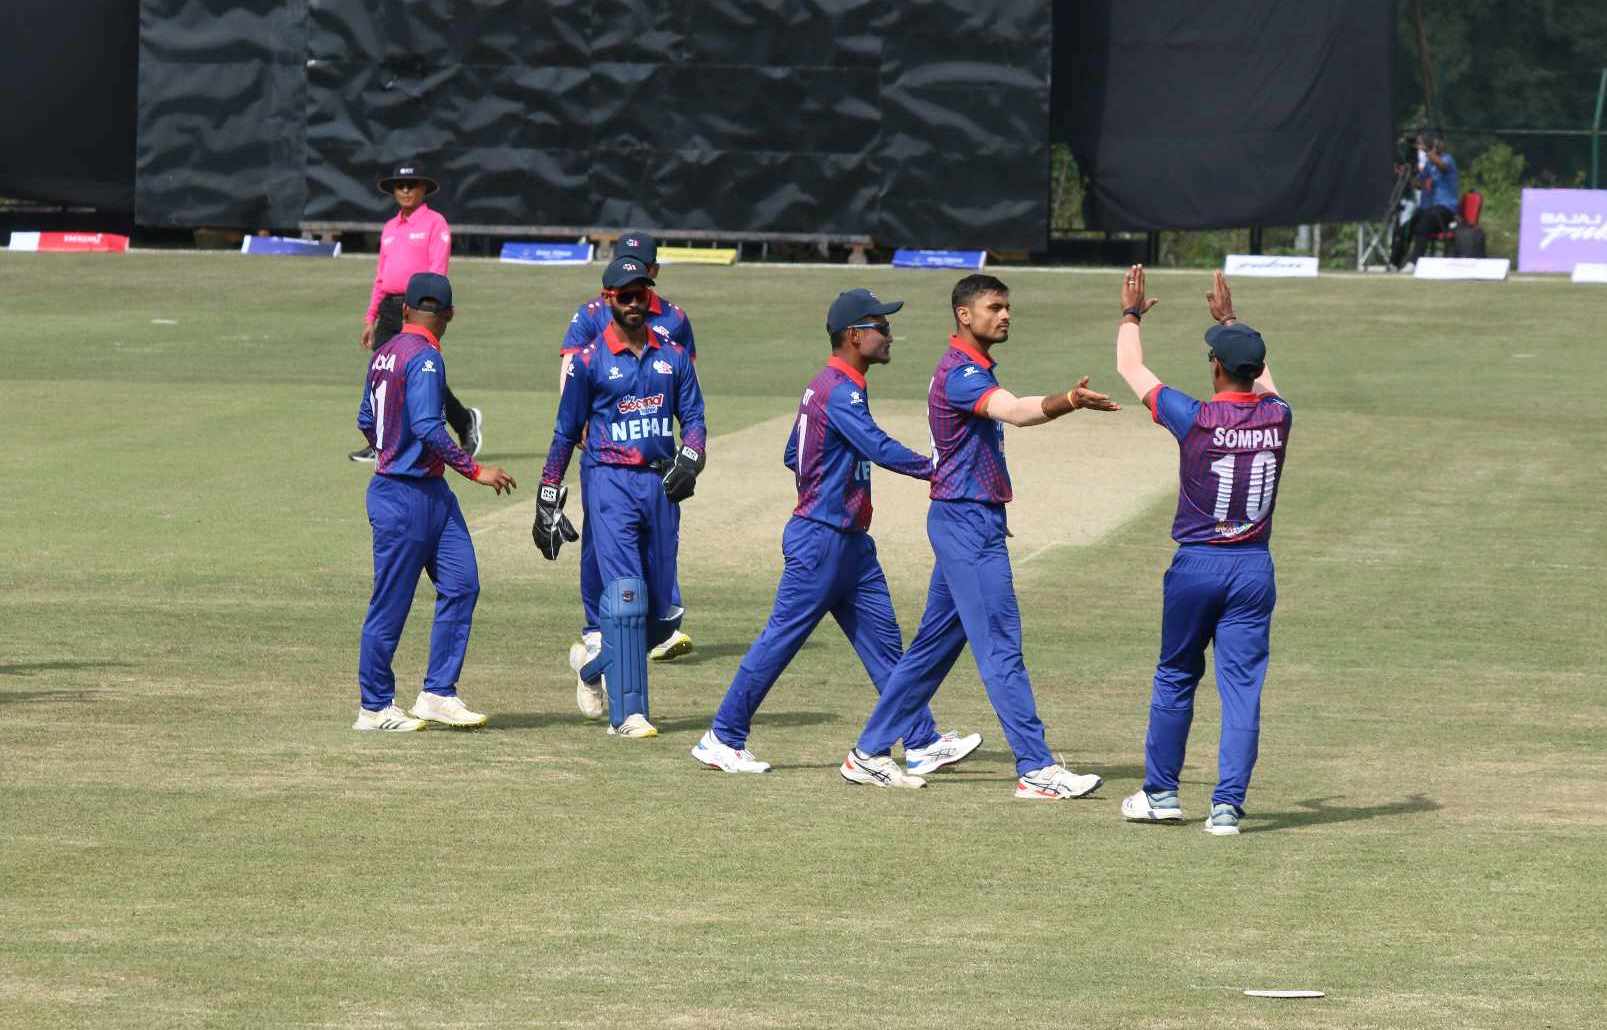 Nepali-Team3-1697619096.jpg